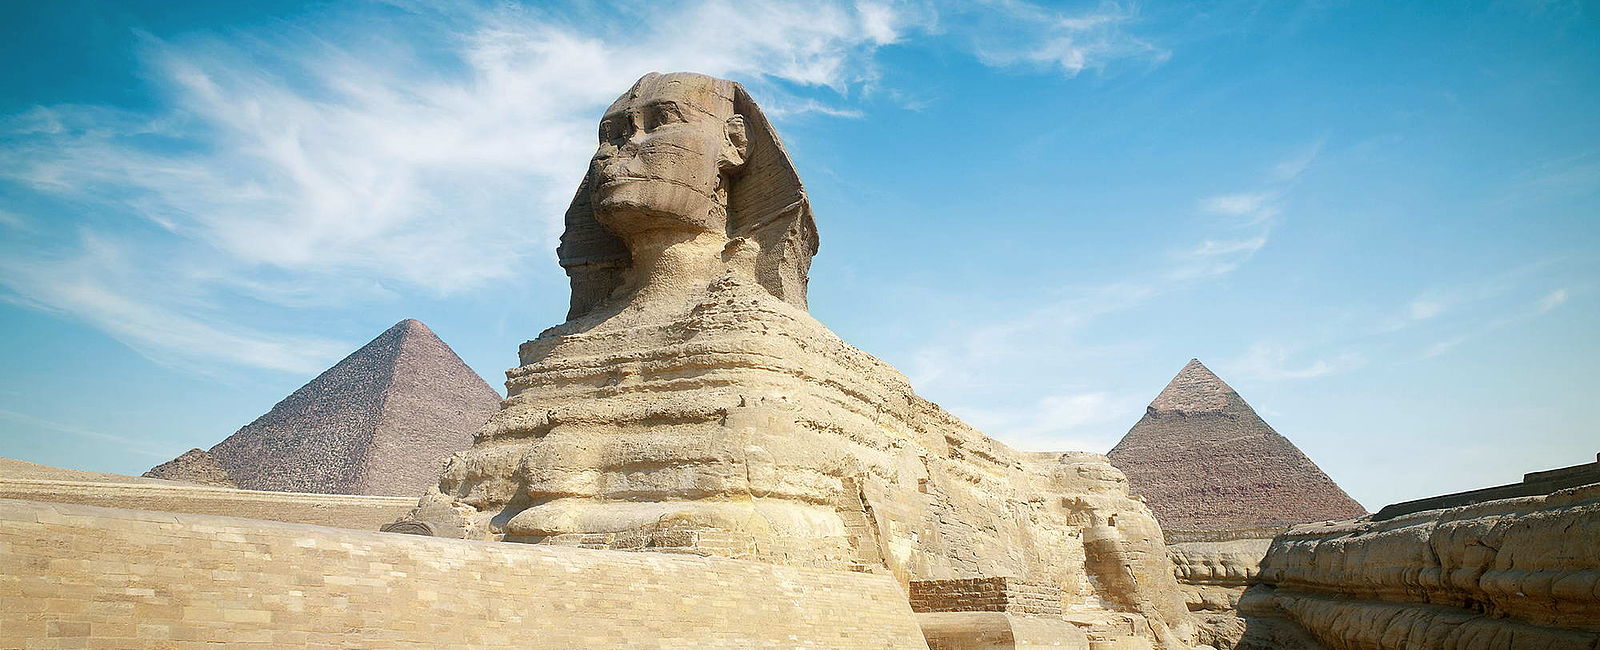 NEWS
 Aktuelle Initiativen der Egypt Tourism Authority 
